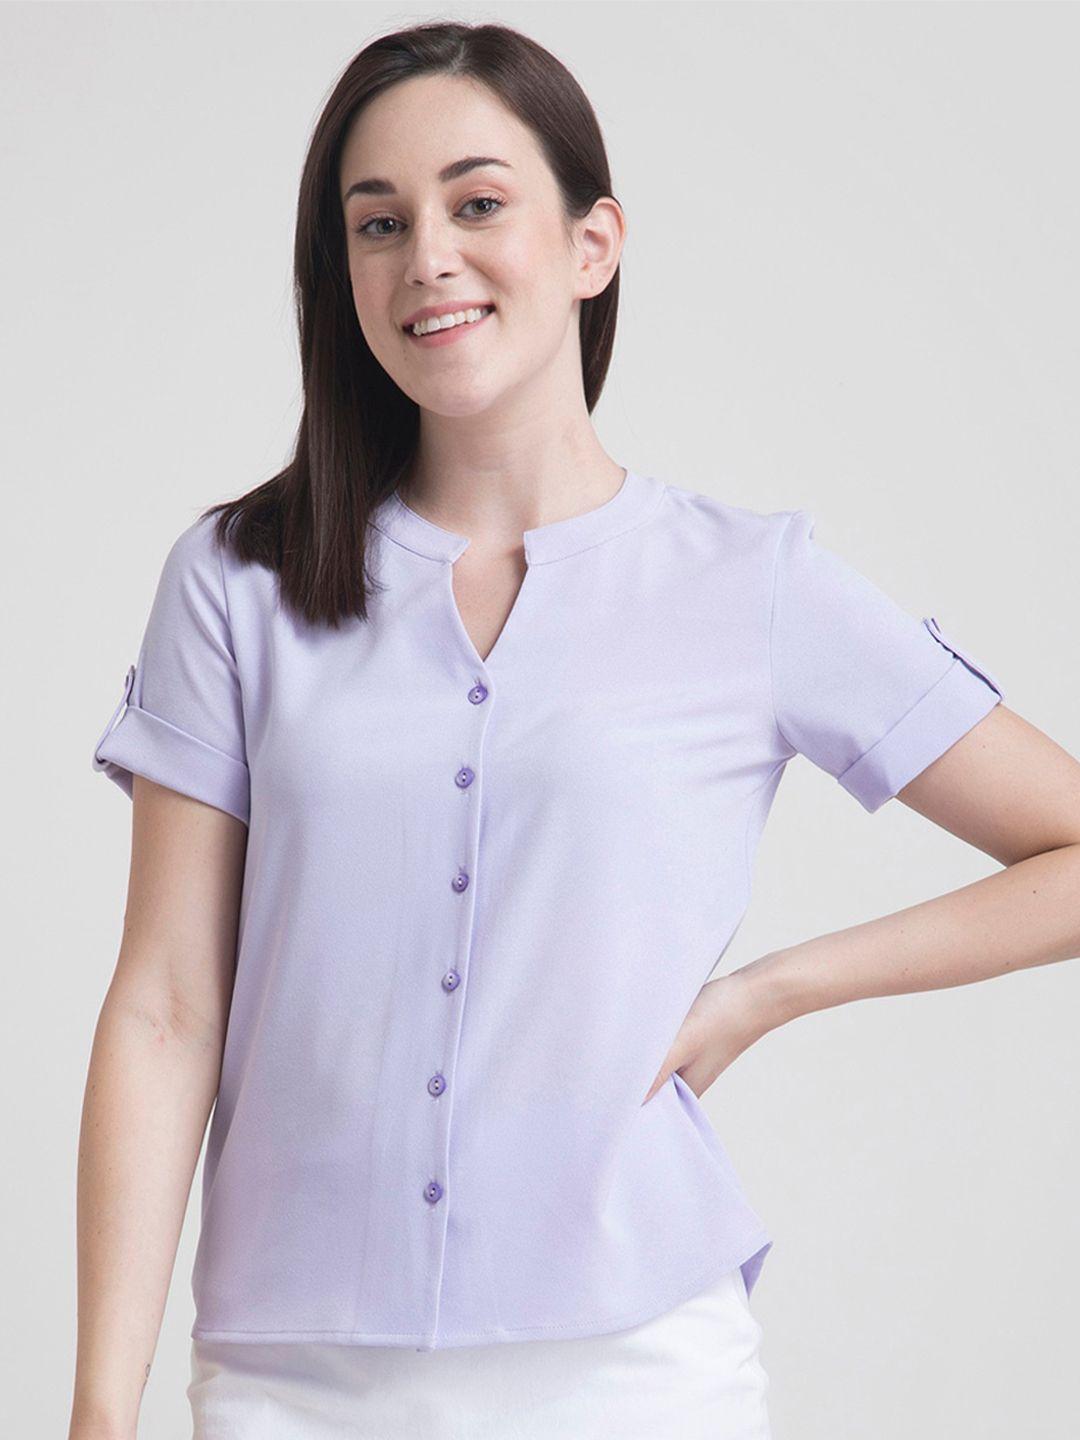 fablestreet lavender striped mandarin collar shirt style top